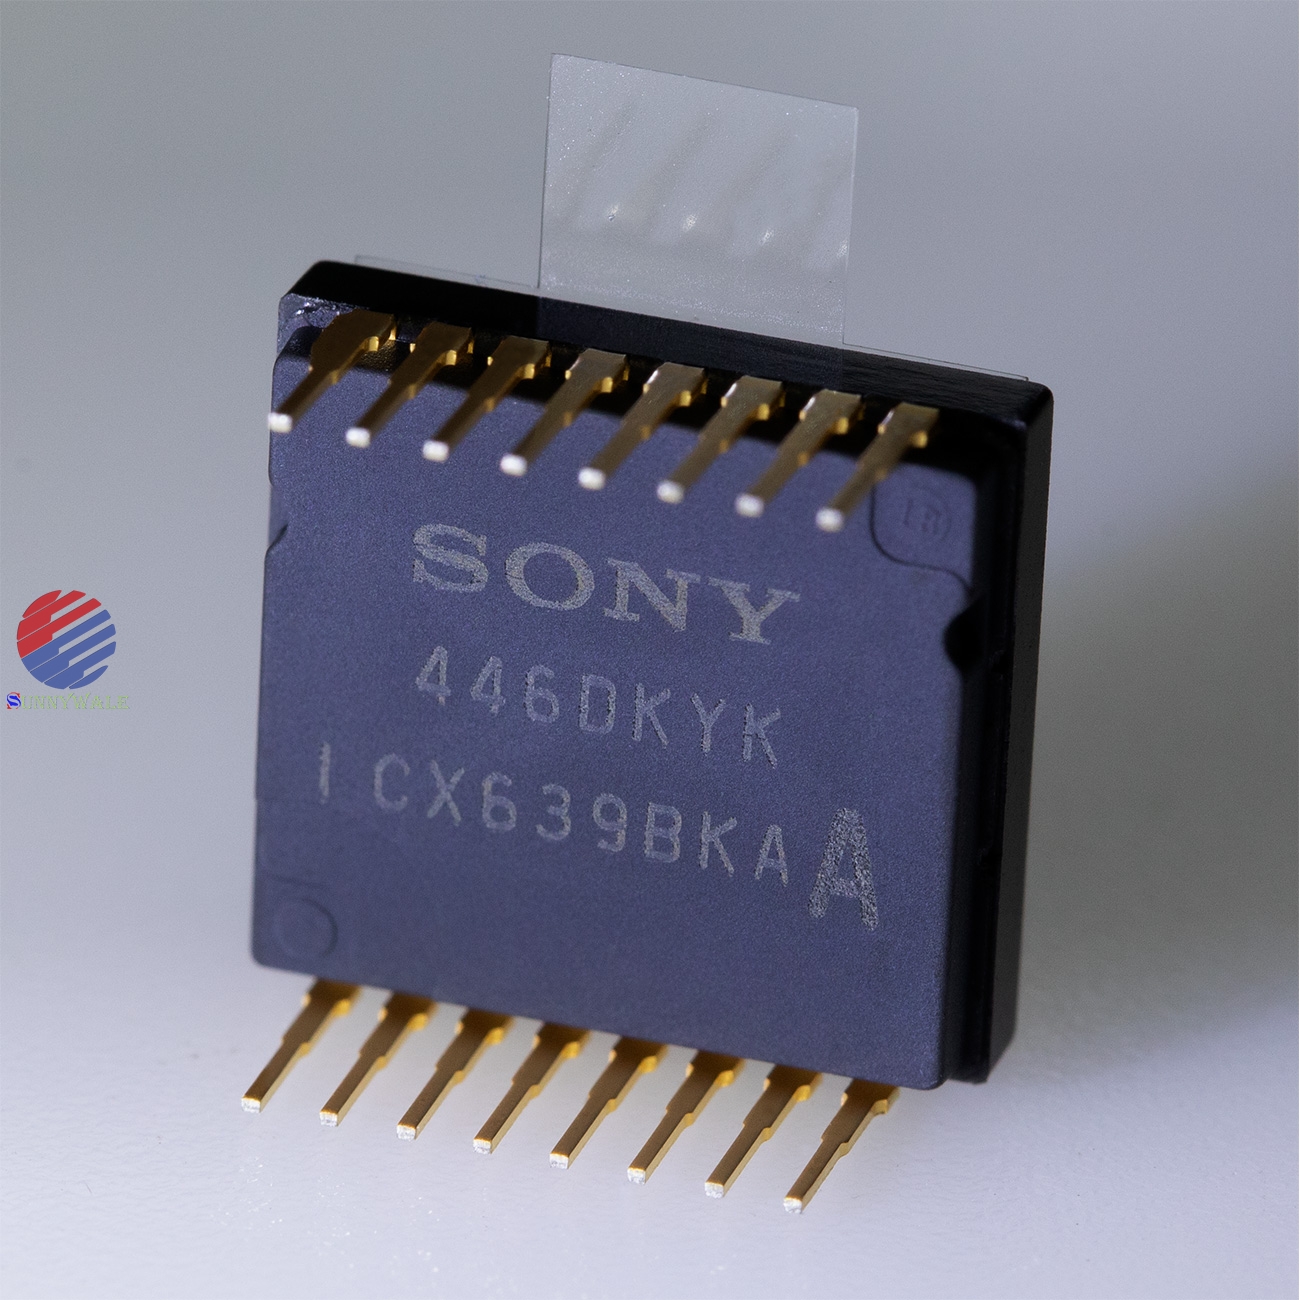 ICX639BKA, SONY original 1/3, security analog camera CCD image sensor, ICX409AK upgrade part number, replace product, PAL style video signal sensor